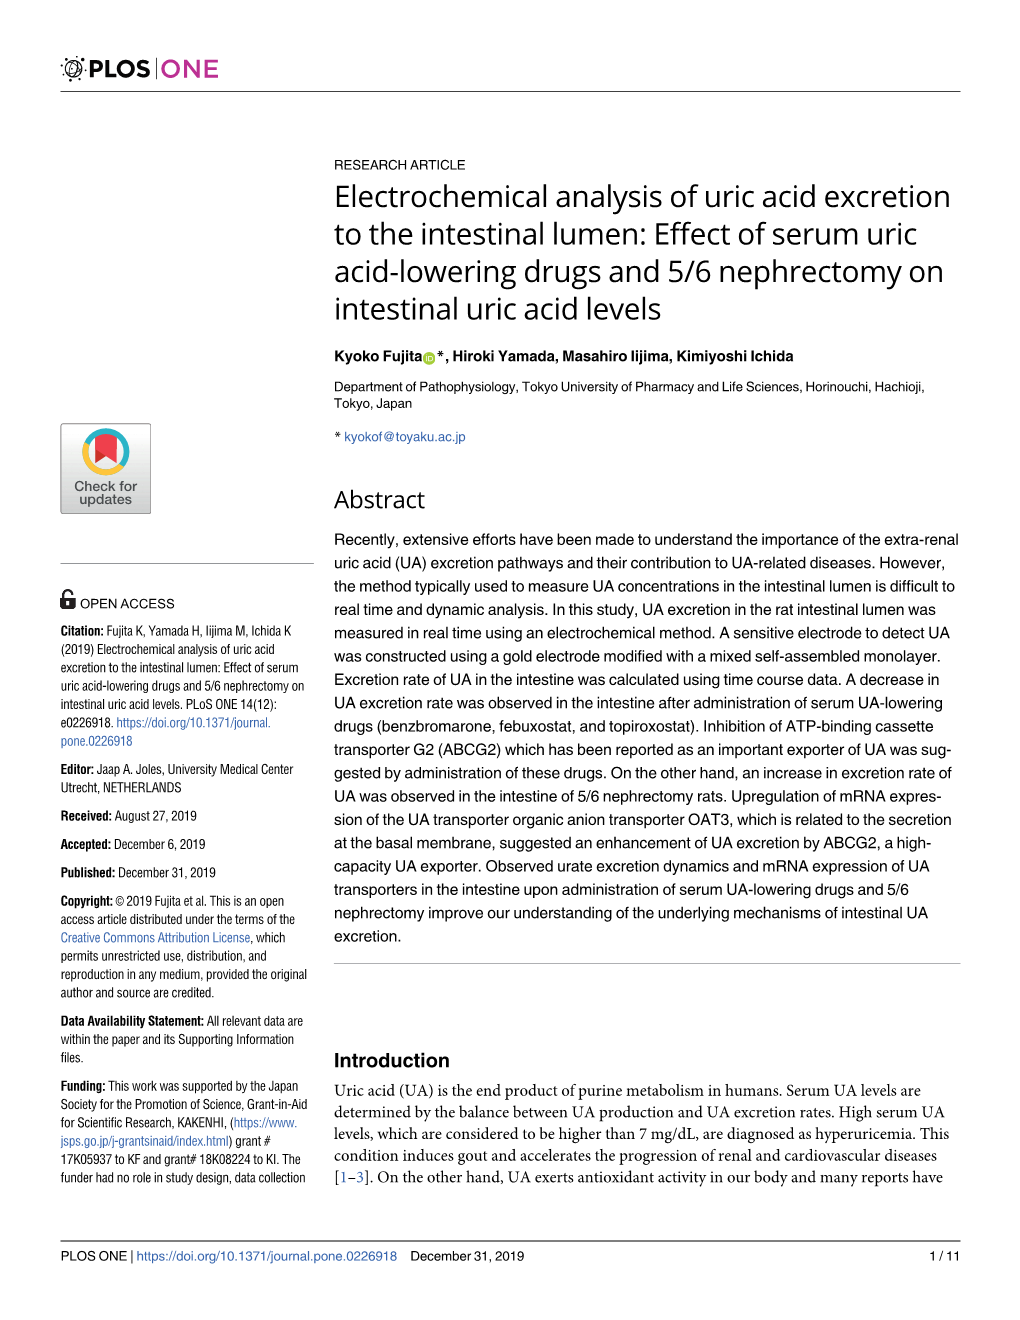 Electrochemical Analysis of Uric Acid Excretion to the Intestinal Lumen: Effect of Serum Uric Acid-Lowering Drugs and 5/6 Nephrectomy on Intestinal Uric Acid Levels